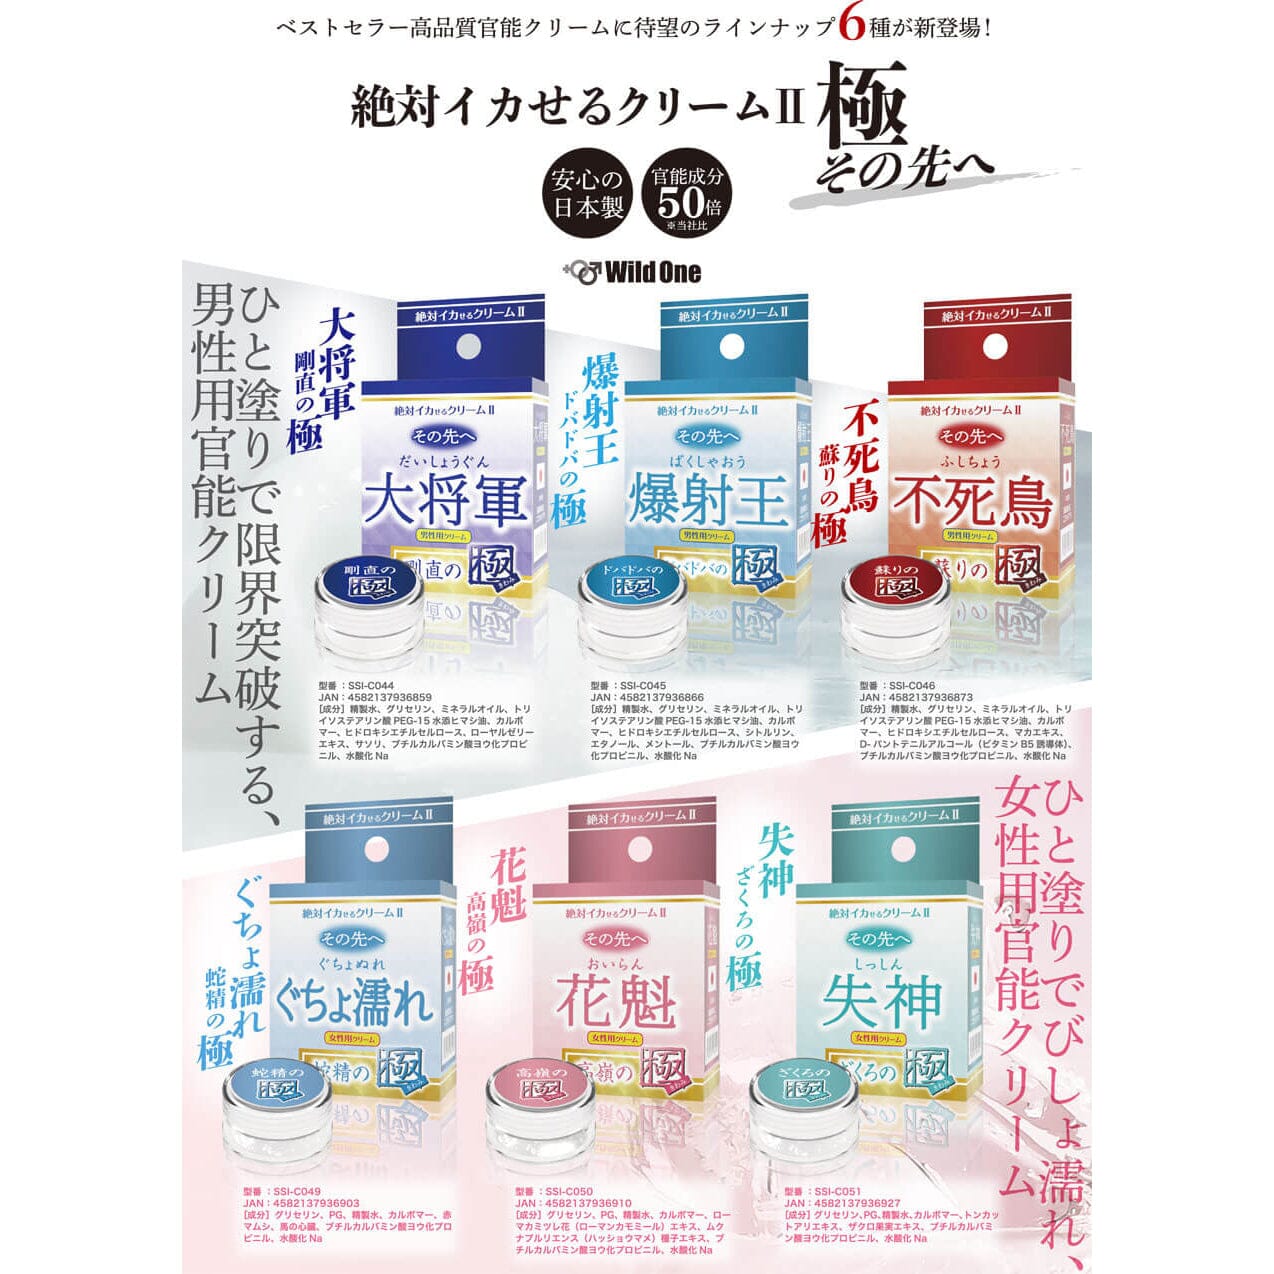 SSI JAPAN 【女性用】絕對潮吹軟膏 第 2 代 情慾濕潤 蛇精の極 購買